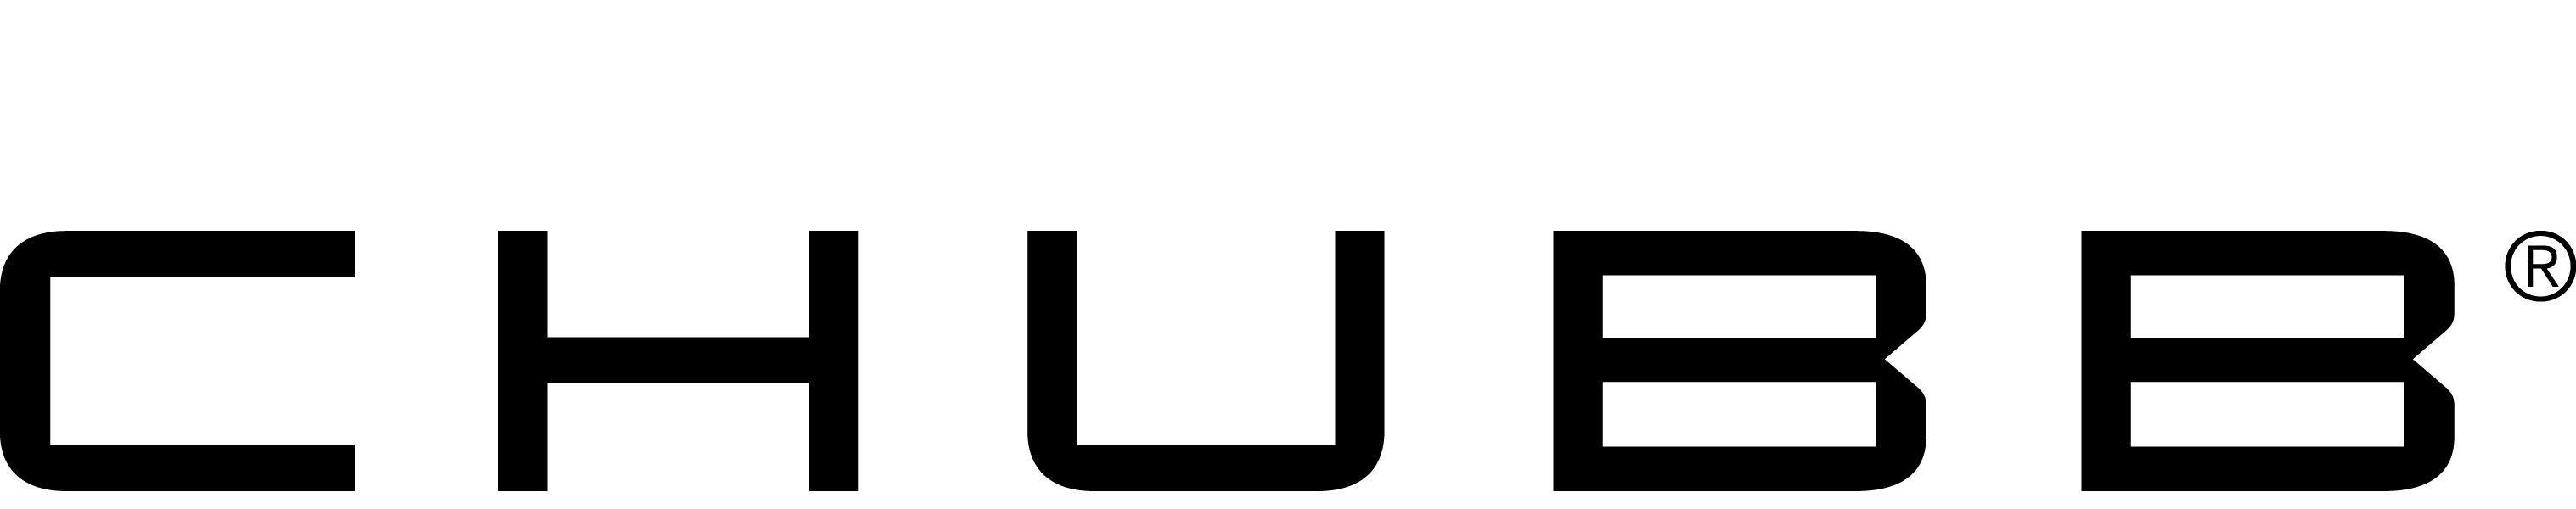 Chubb Insurance Logo - Chubb Logo】| Chubb Logo Symbol Vector PNG Free Download